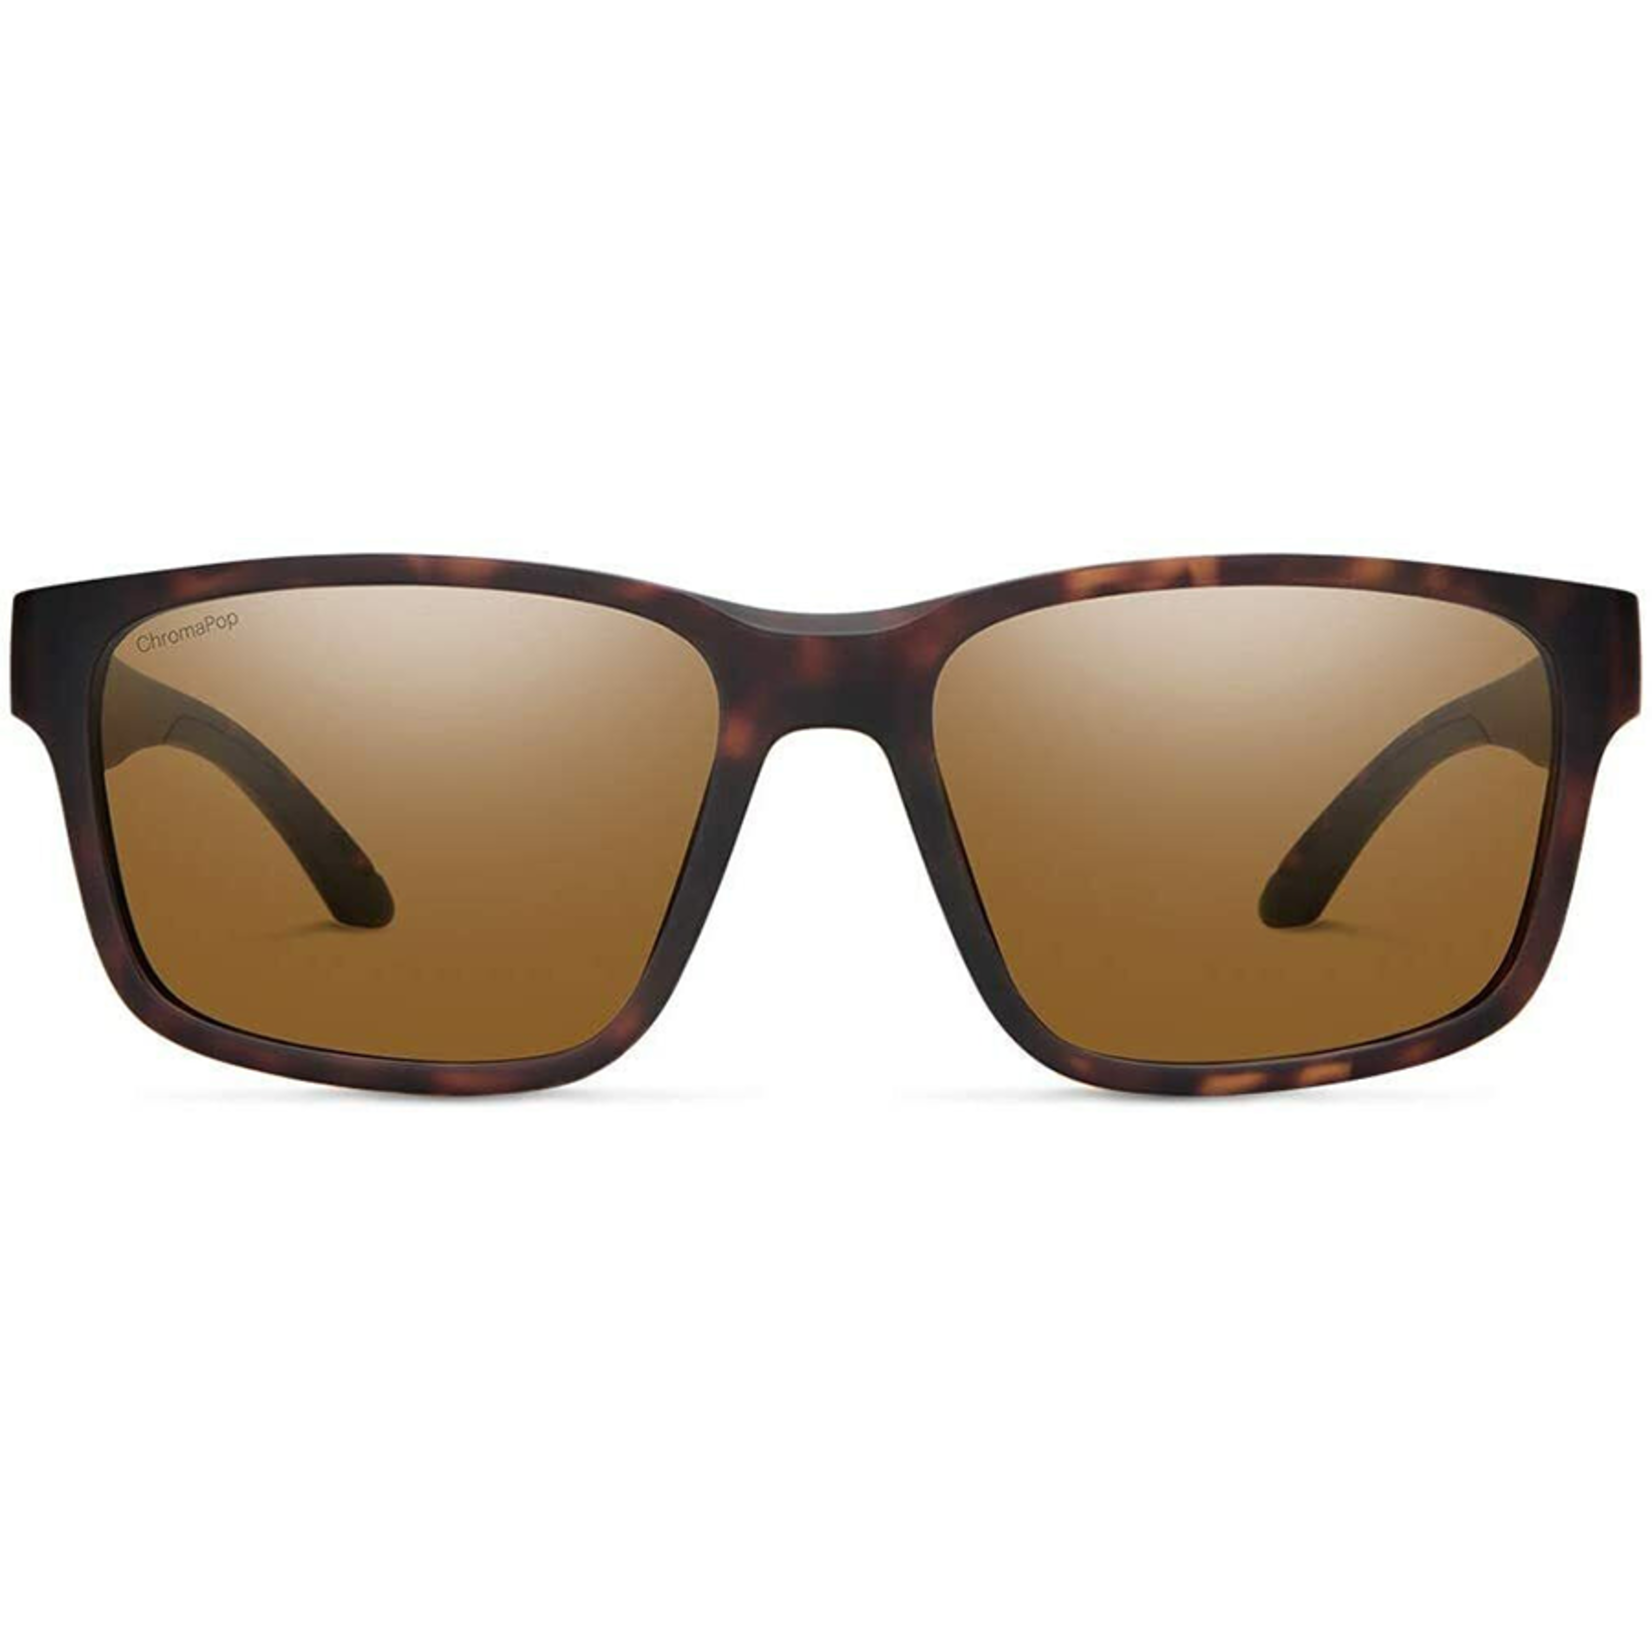 Smith Optics Smith Basecamp Sunglasses Matte Tortoise + ChromaPop Polarized Brown Lens